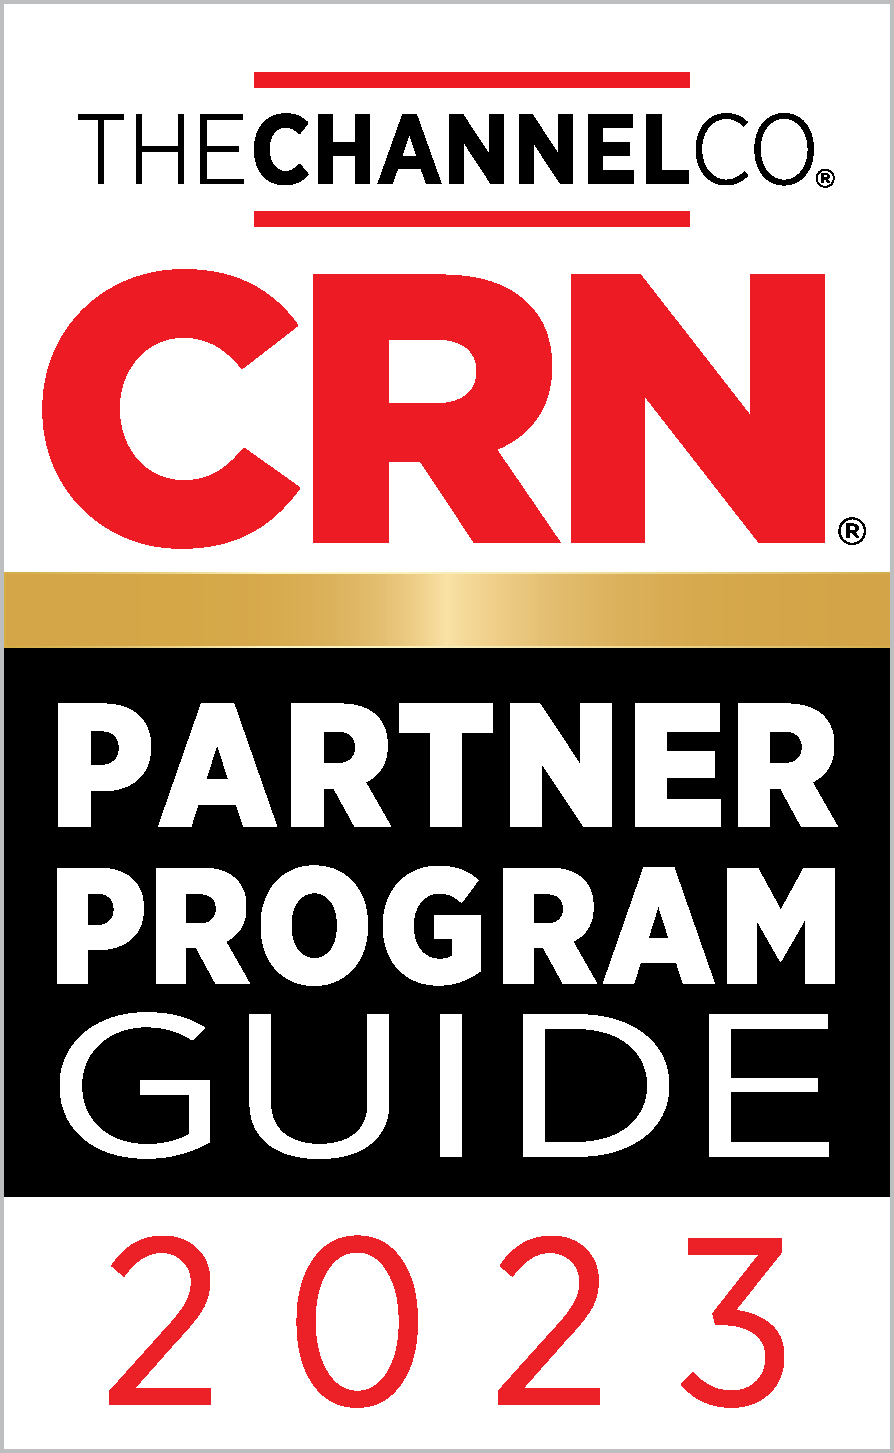 CRN programme partenaire guide 2023